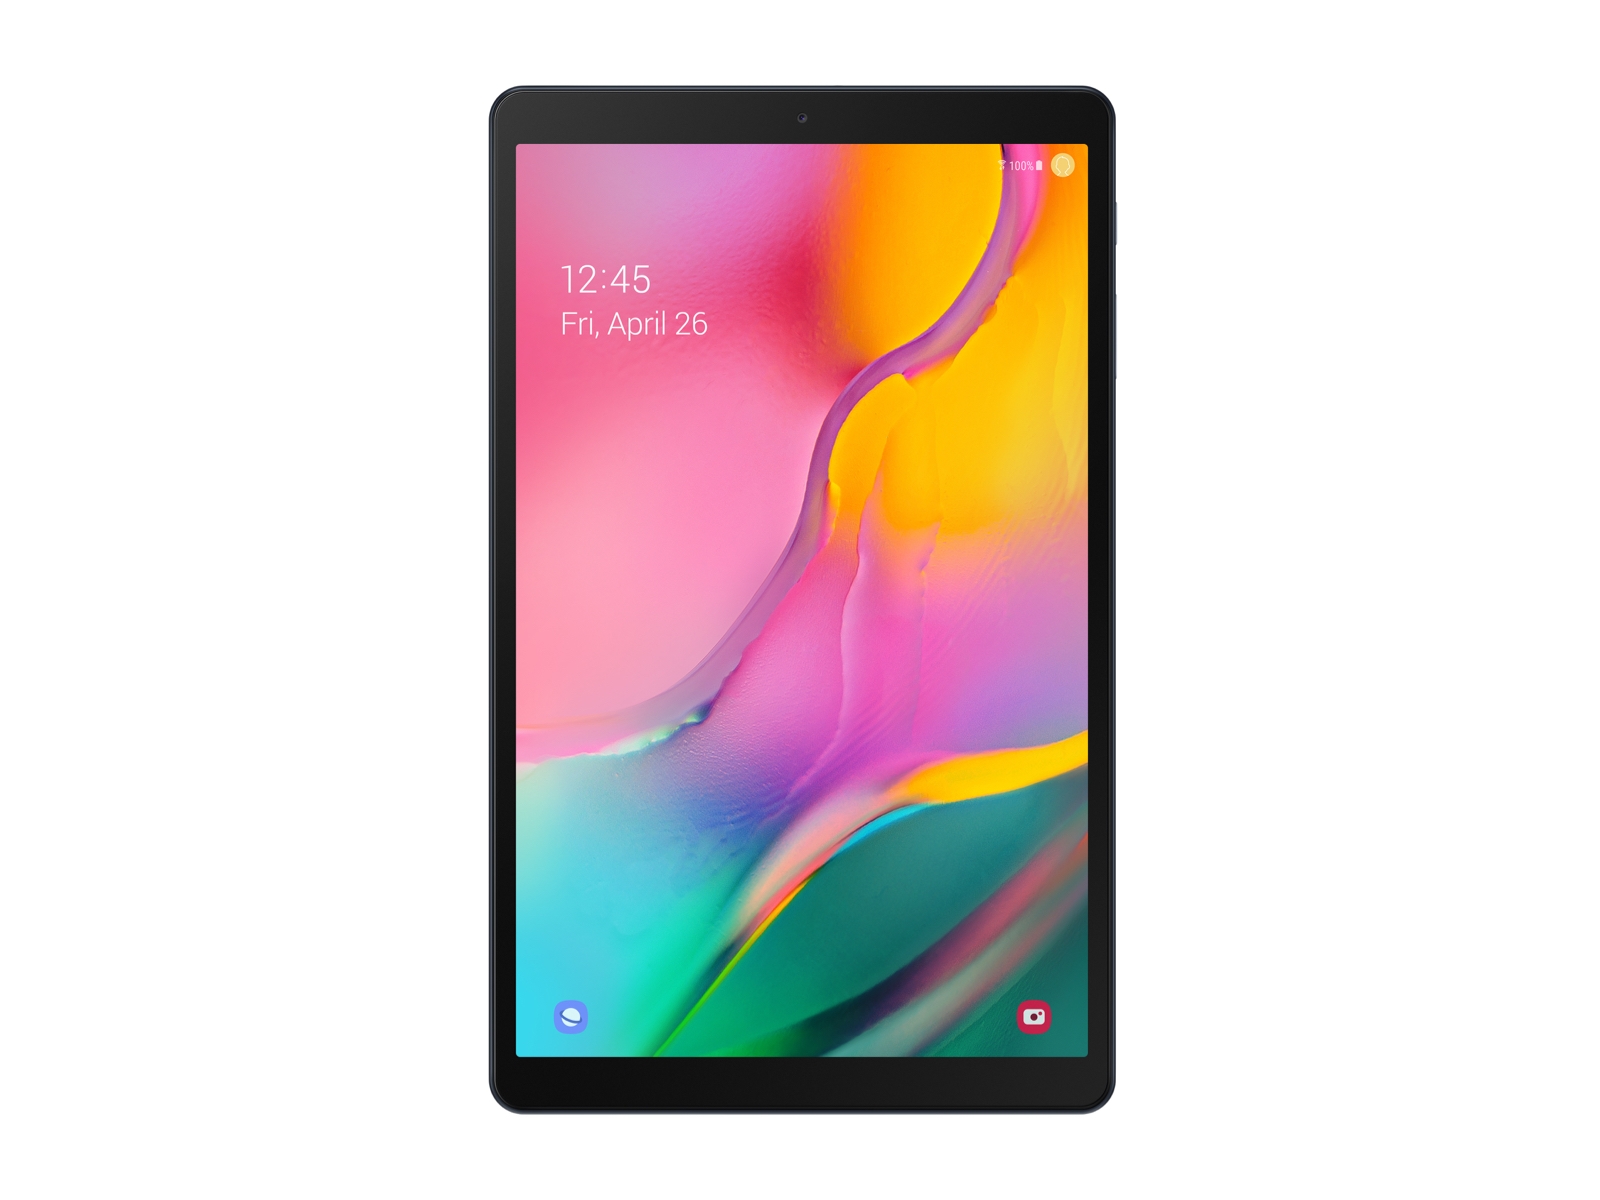 Galaxy Tab A 10.1 2019 64GB Silver Wi Fi Tablets - SM-T510NZSFXAR 